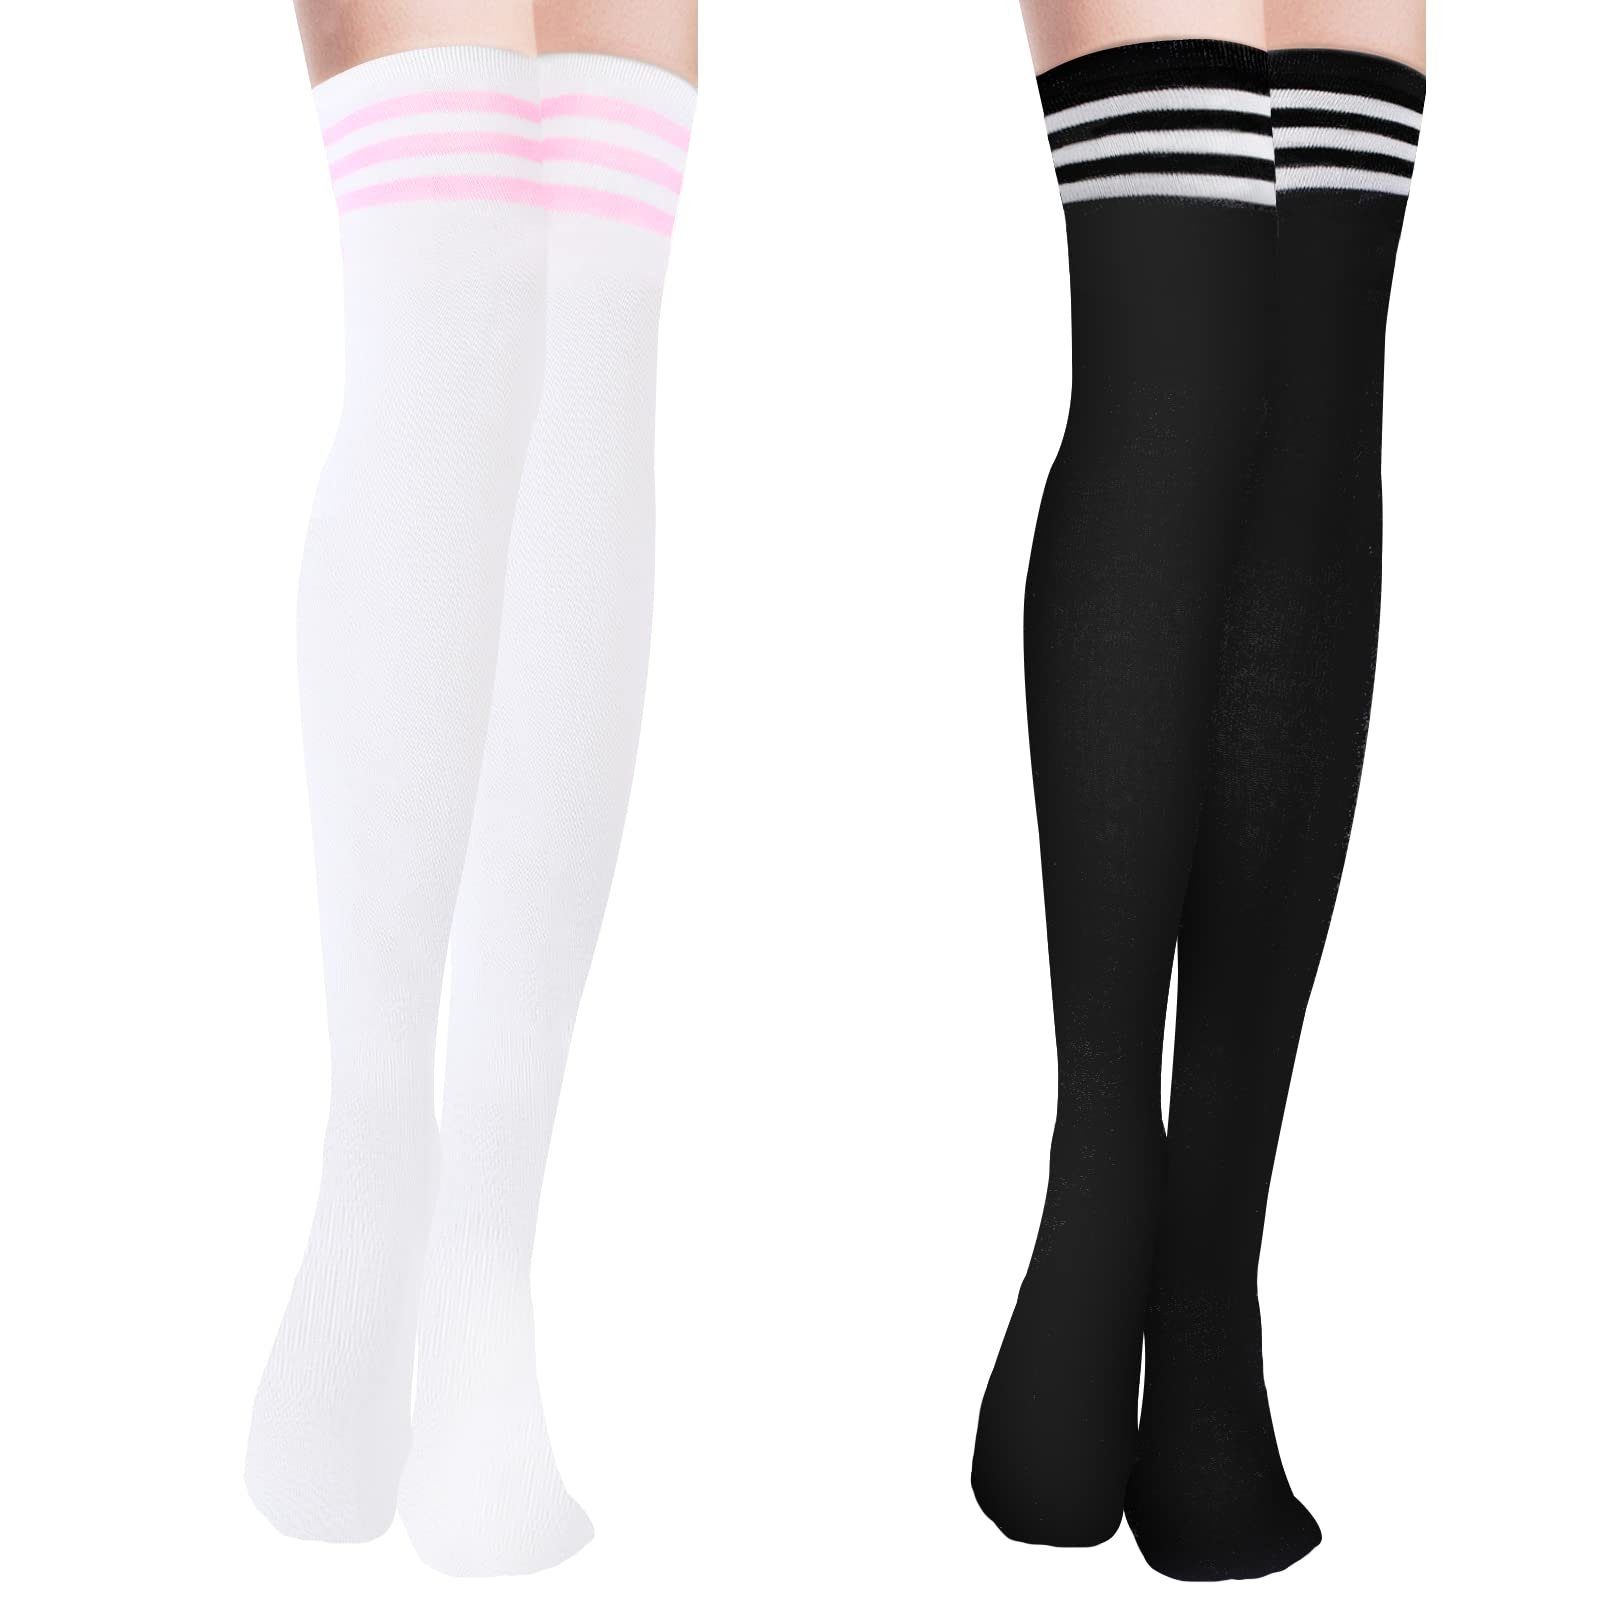 POCHUMIDUU Langsocken 2 Paar Kniestrümpfe Overknee Strümpfe Damen Socks (2-Paar, 2er Pack) Lange Gestreifte Socken,Warme Knee Stockings für Mädchen